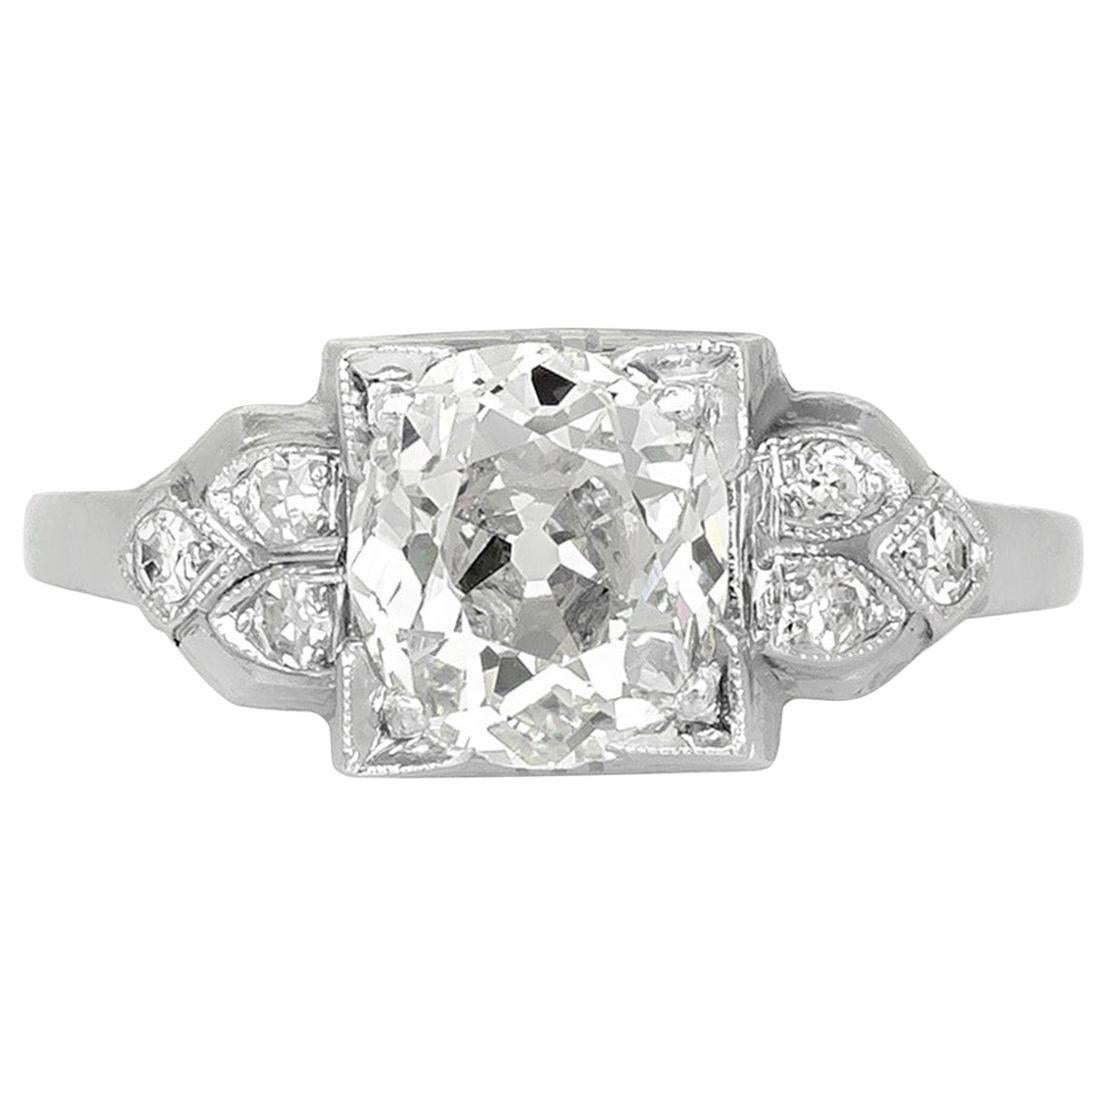 1920s-1930s Platinum Engagement Ring with 1.74 Carat Round Diamond